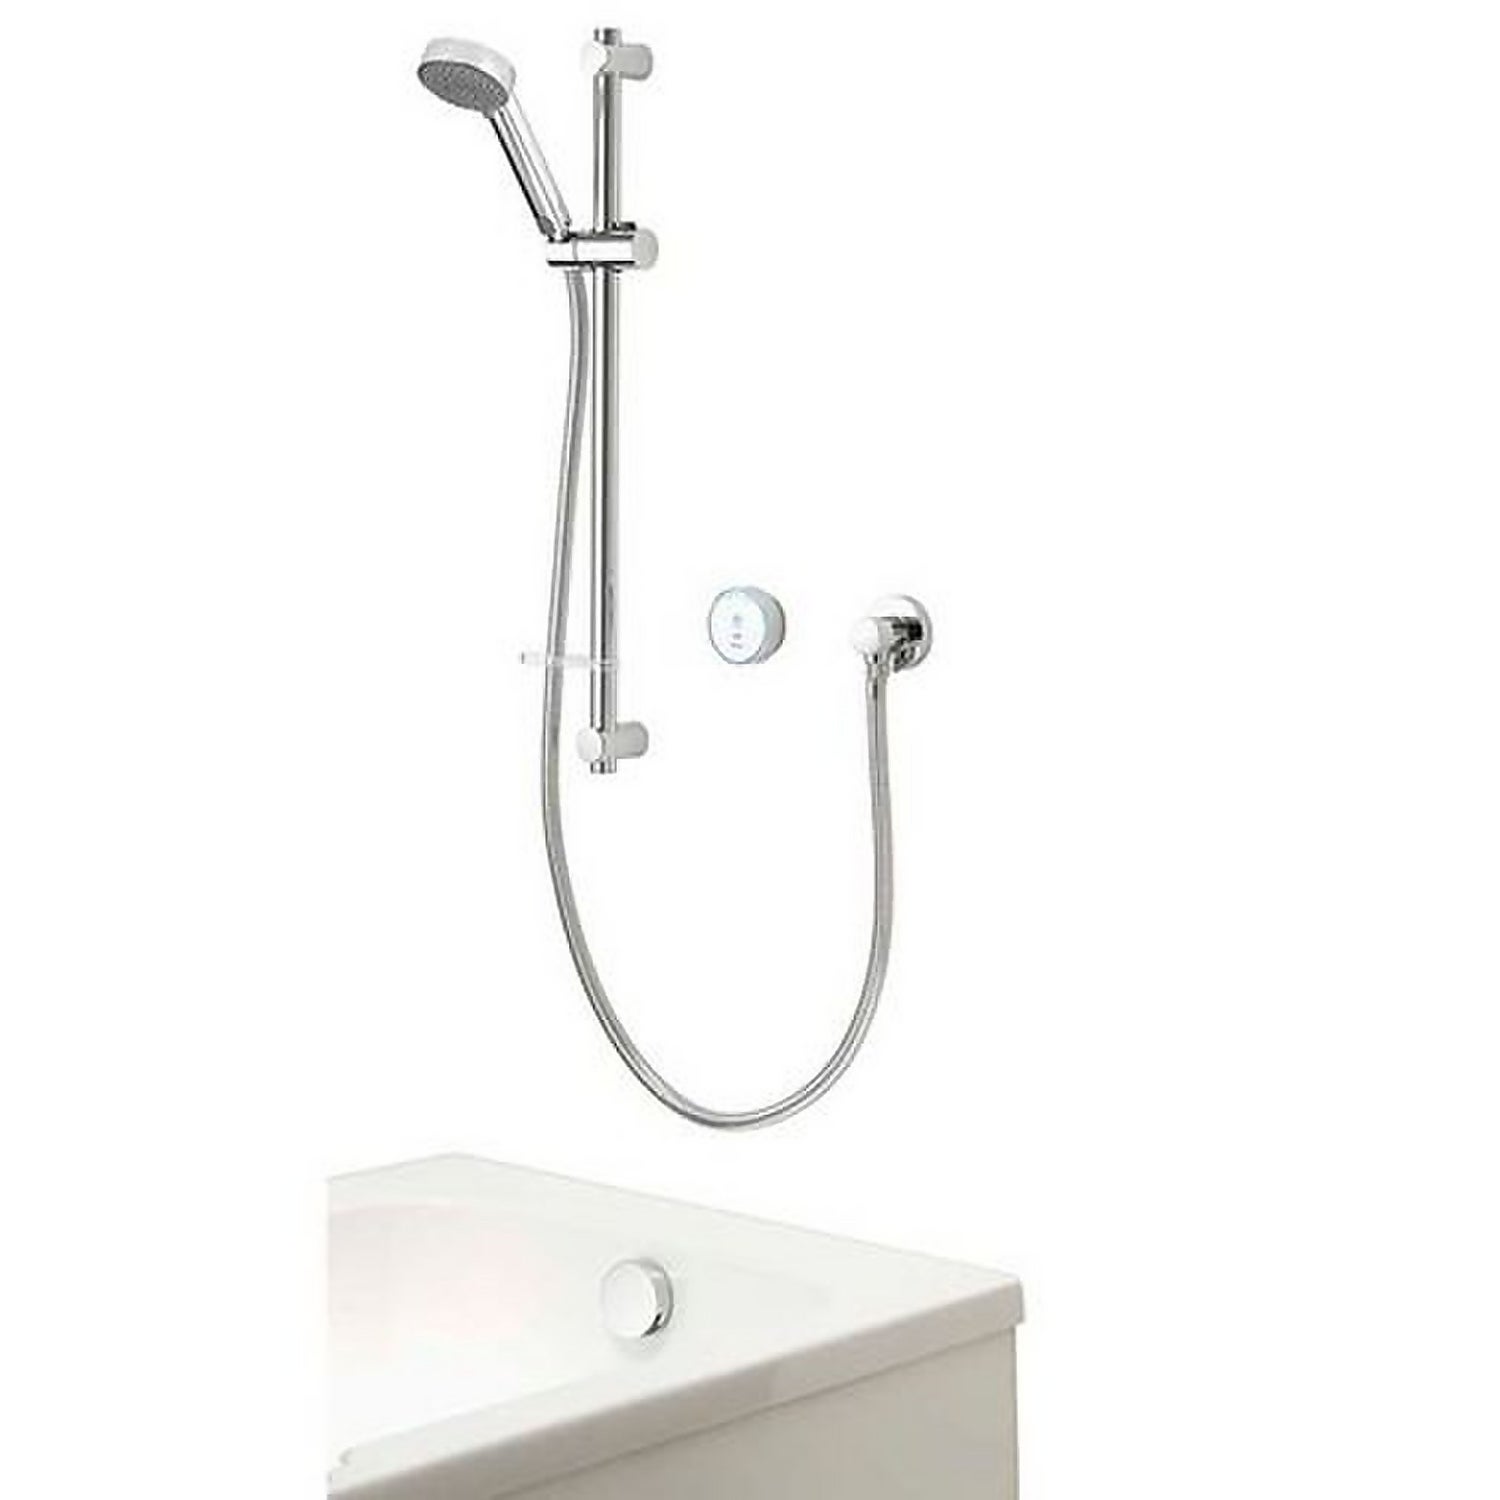 Aqualisa Quartz Blue Smart Shower & Bathfill Kit for Combi Boilers